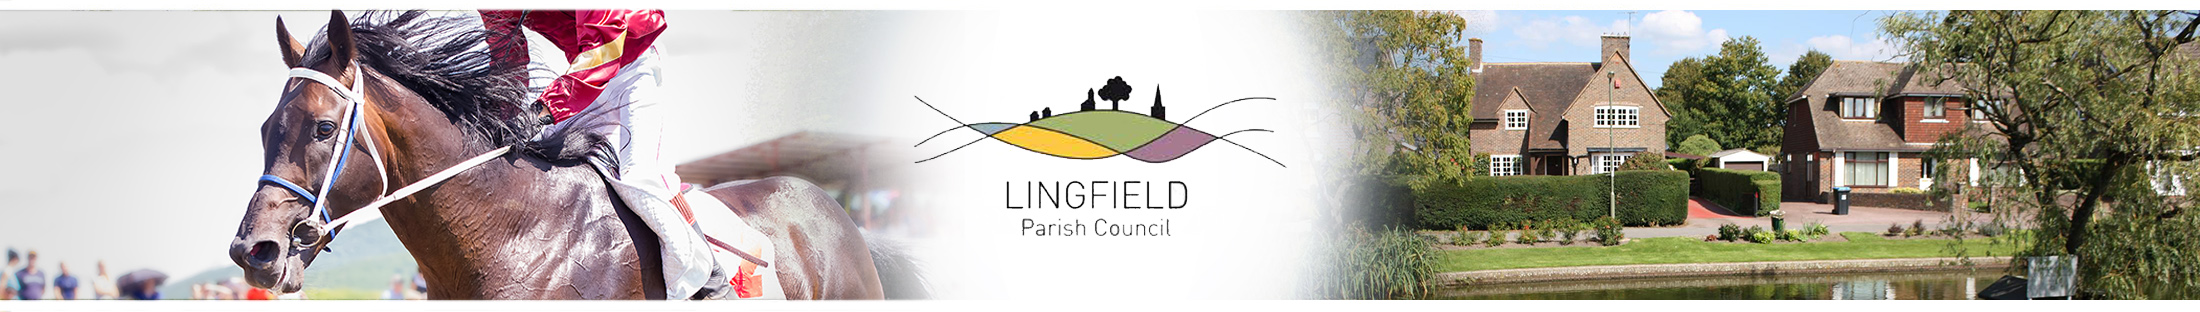 Header Image for Lingfield Parish Council